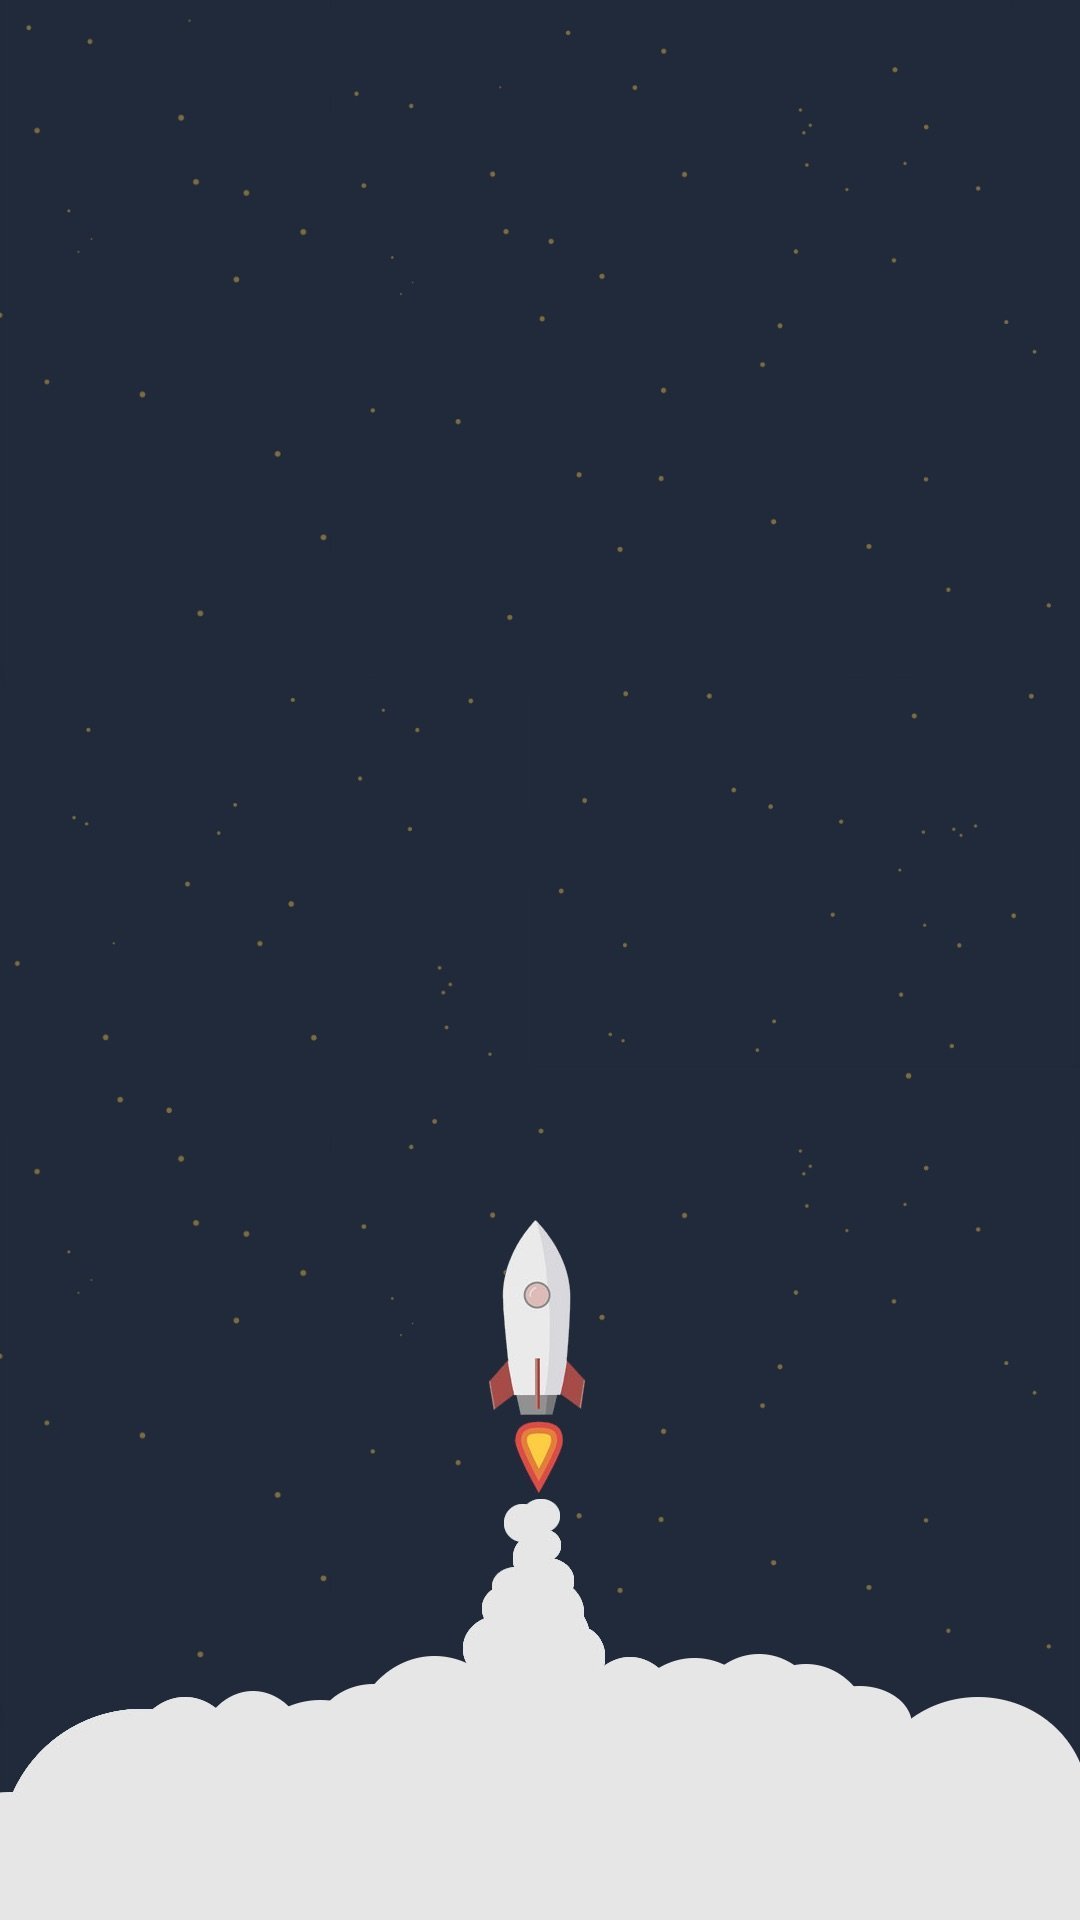 Rocket Liftoff Illustration iPhone HD Wallpaper